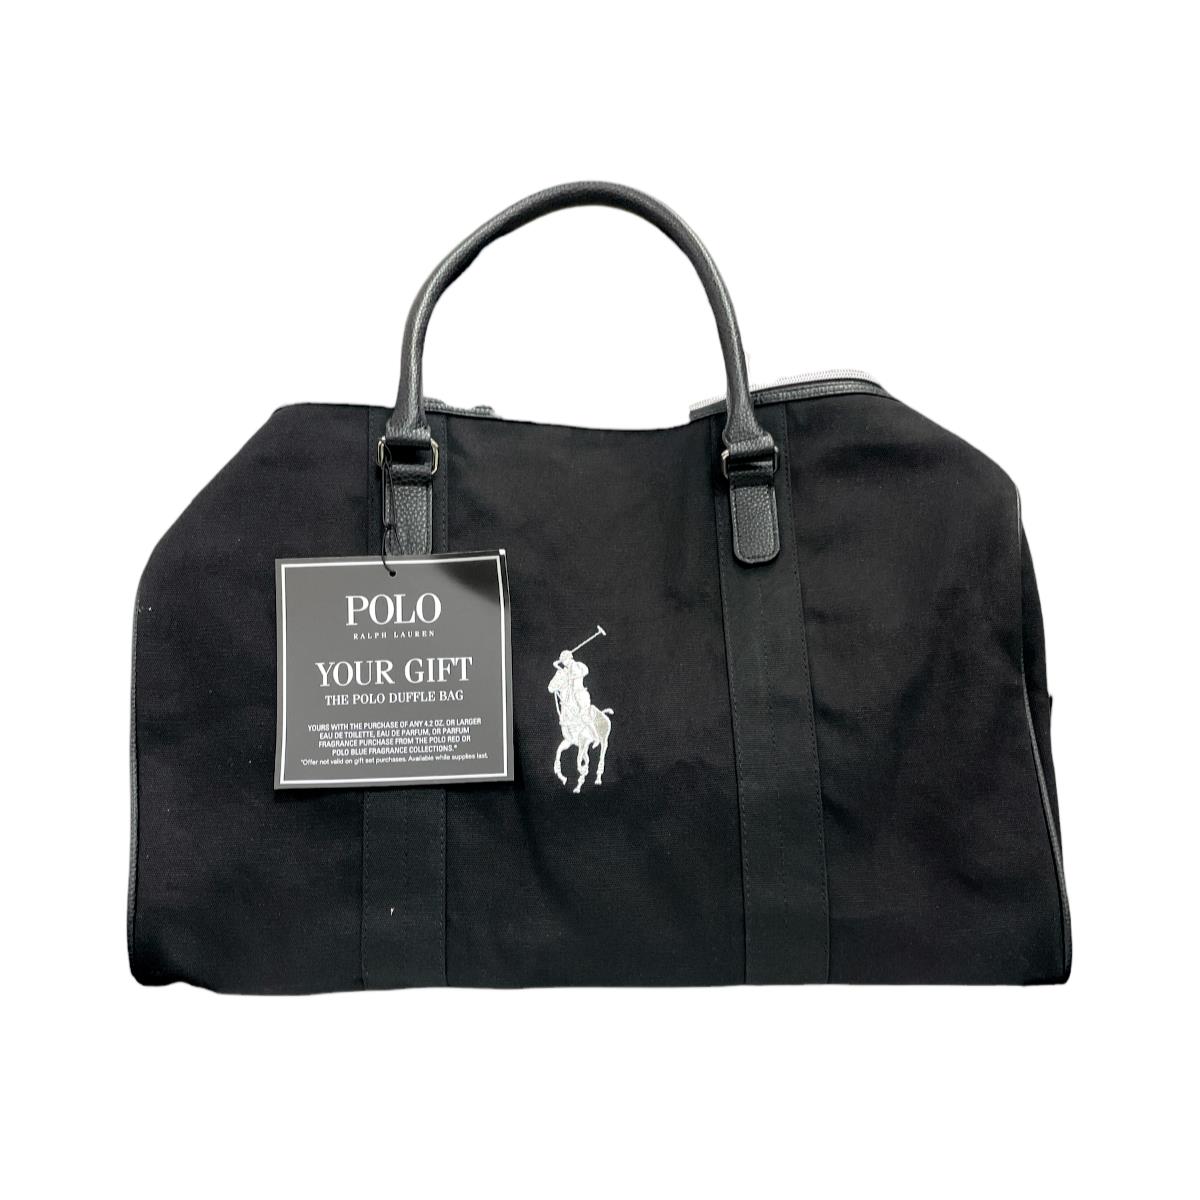 Ralph Lauren The Polo Black Duffle Bag 20 W x 11 H - Black